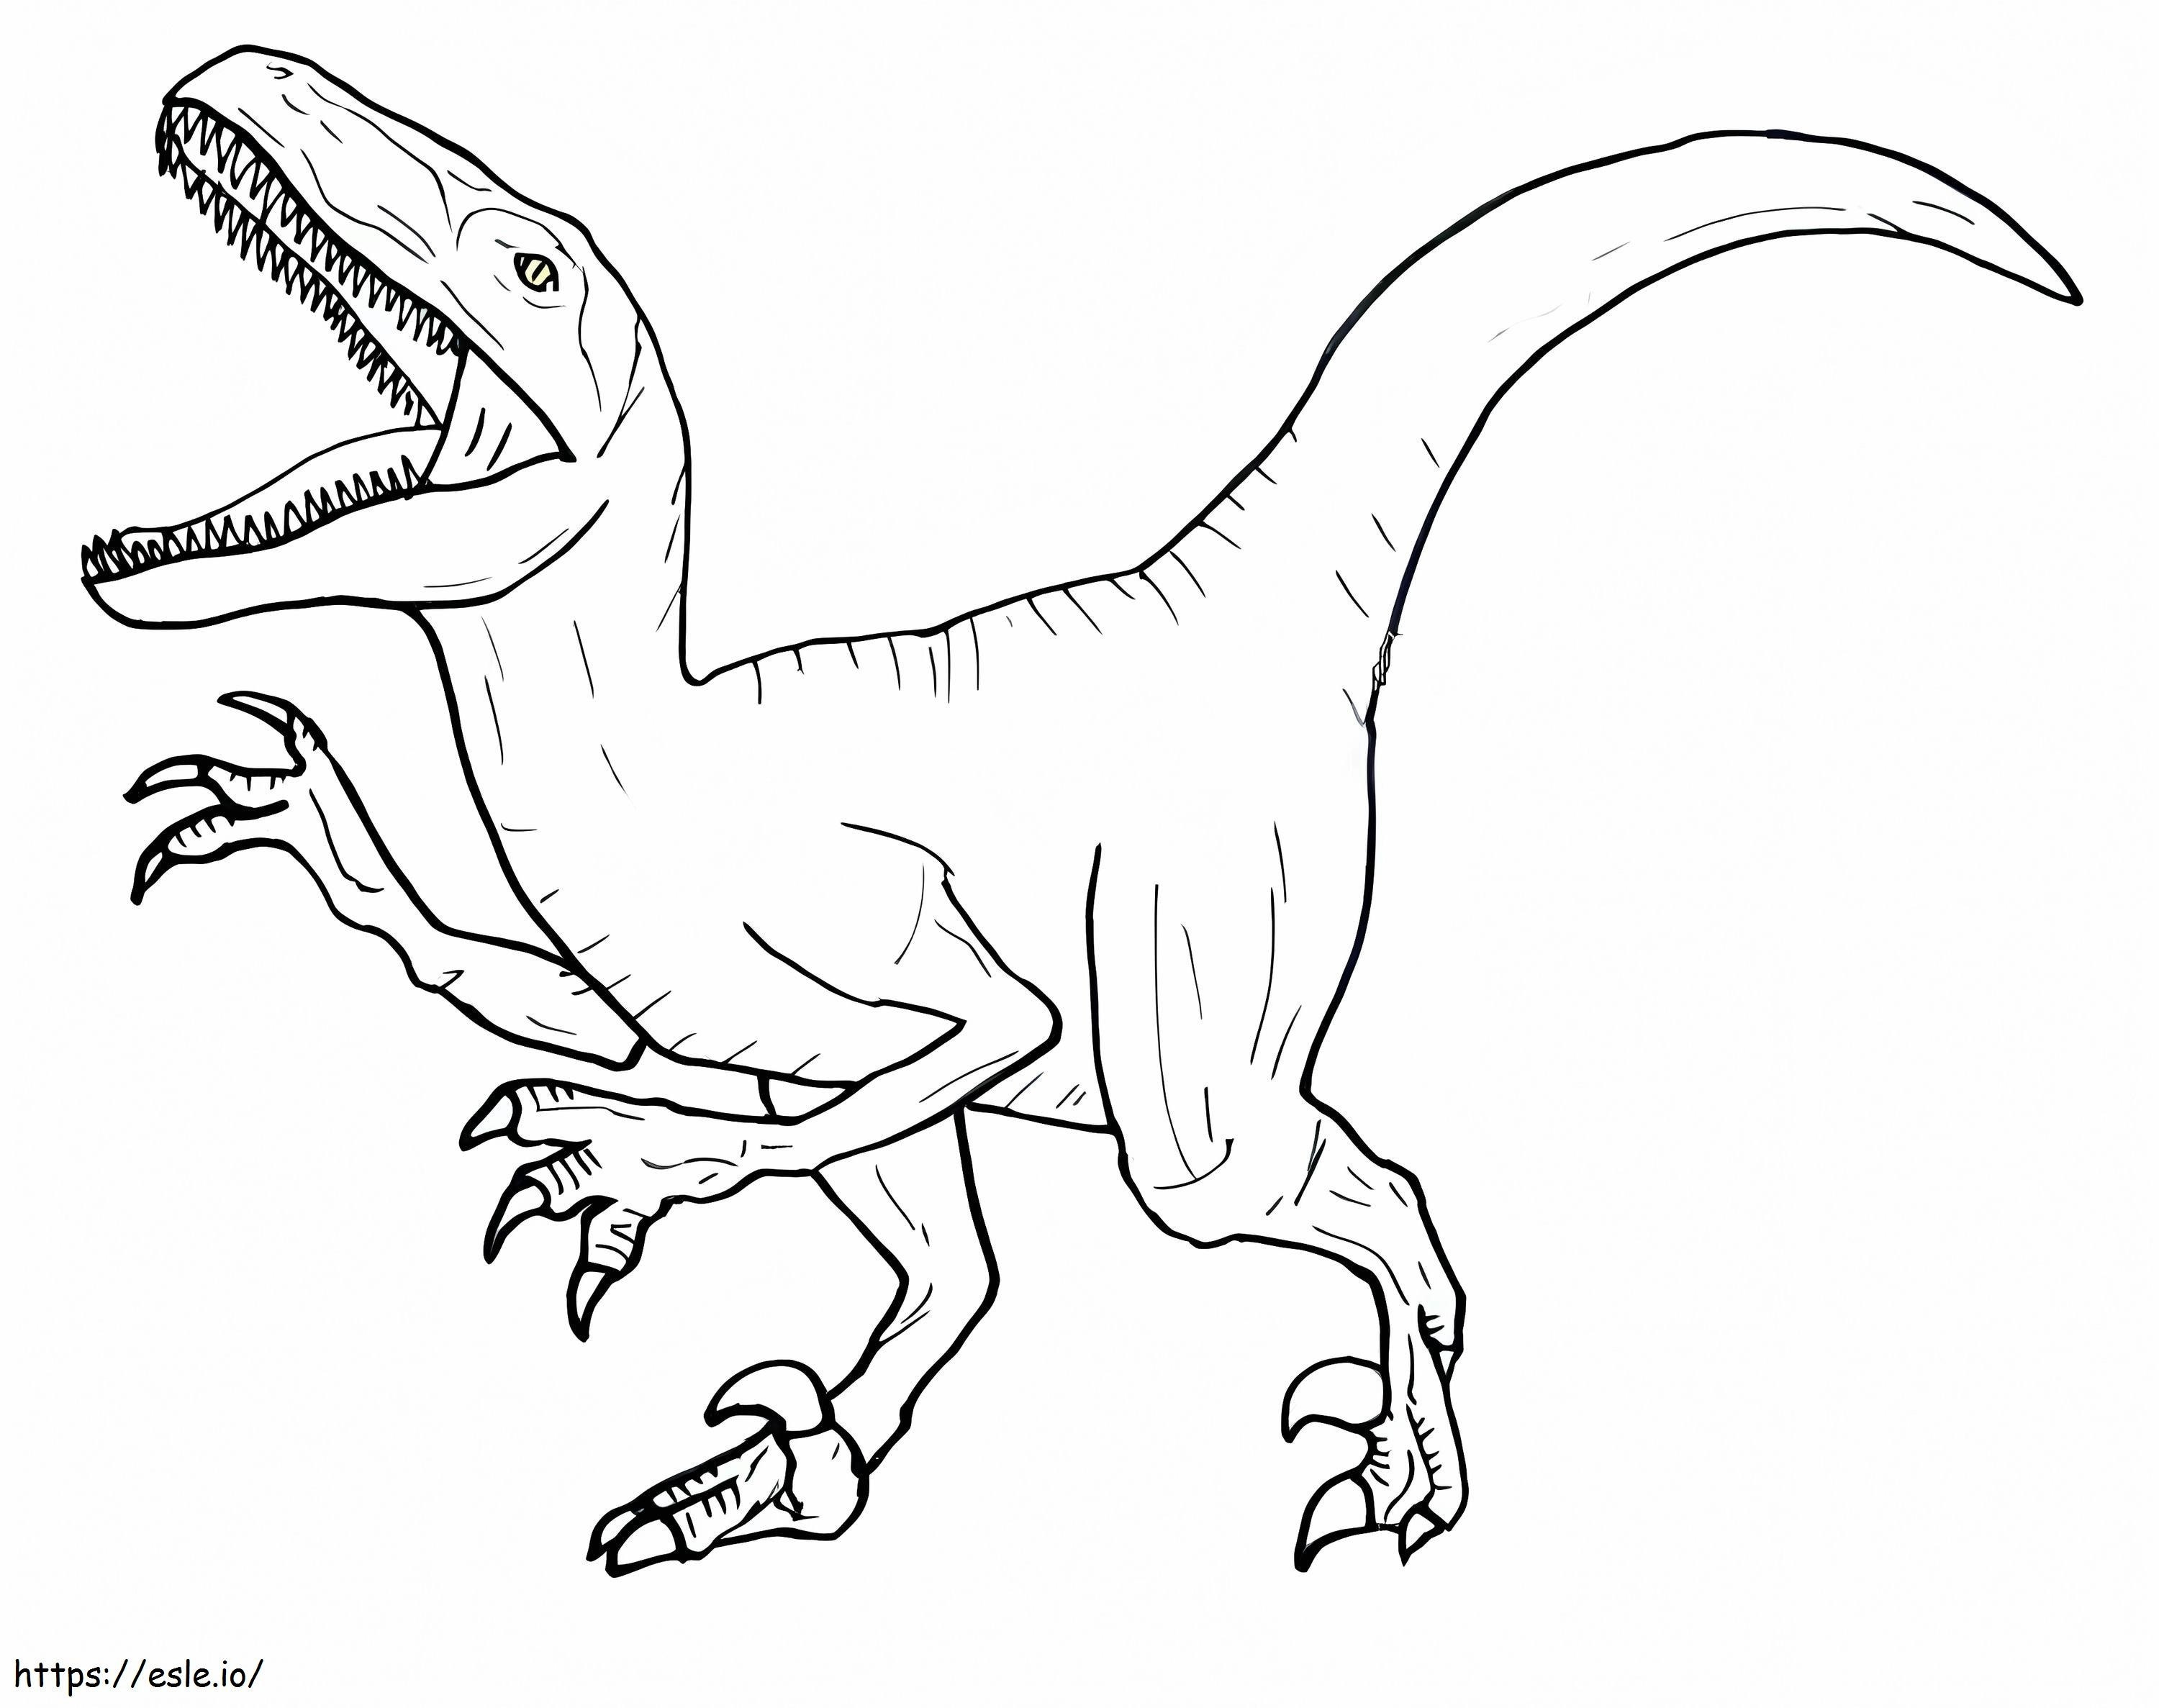 Velociraptor 7 coloring page